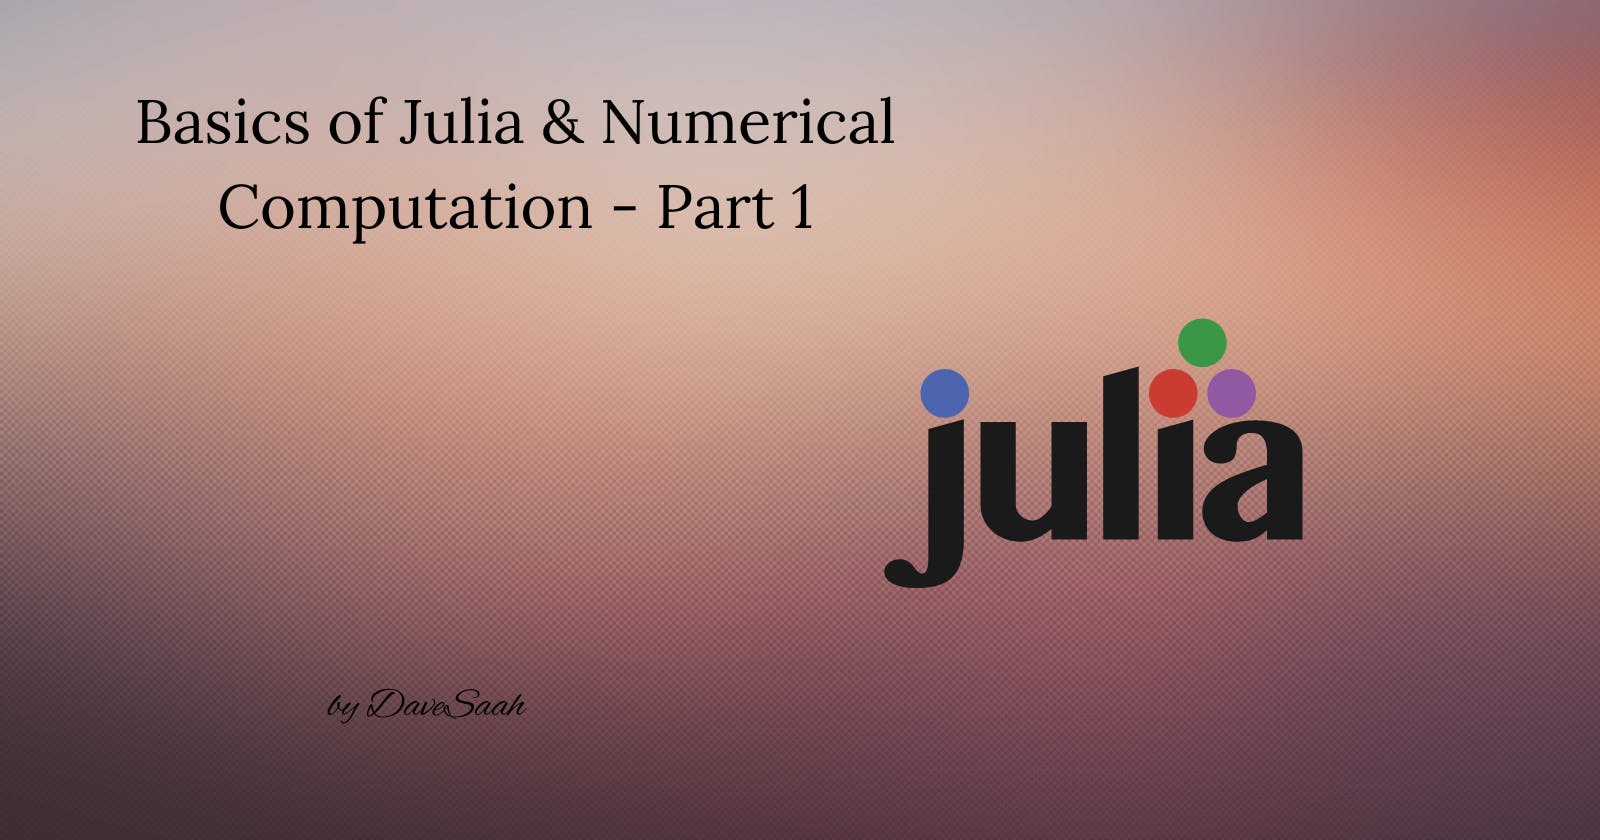 Basics of Julia & Numerical Computation Part 1